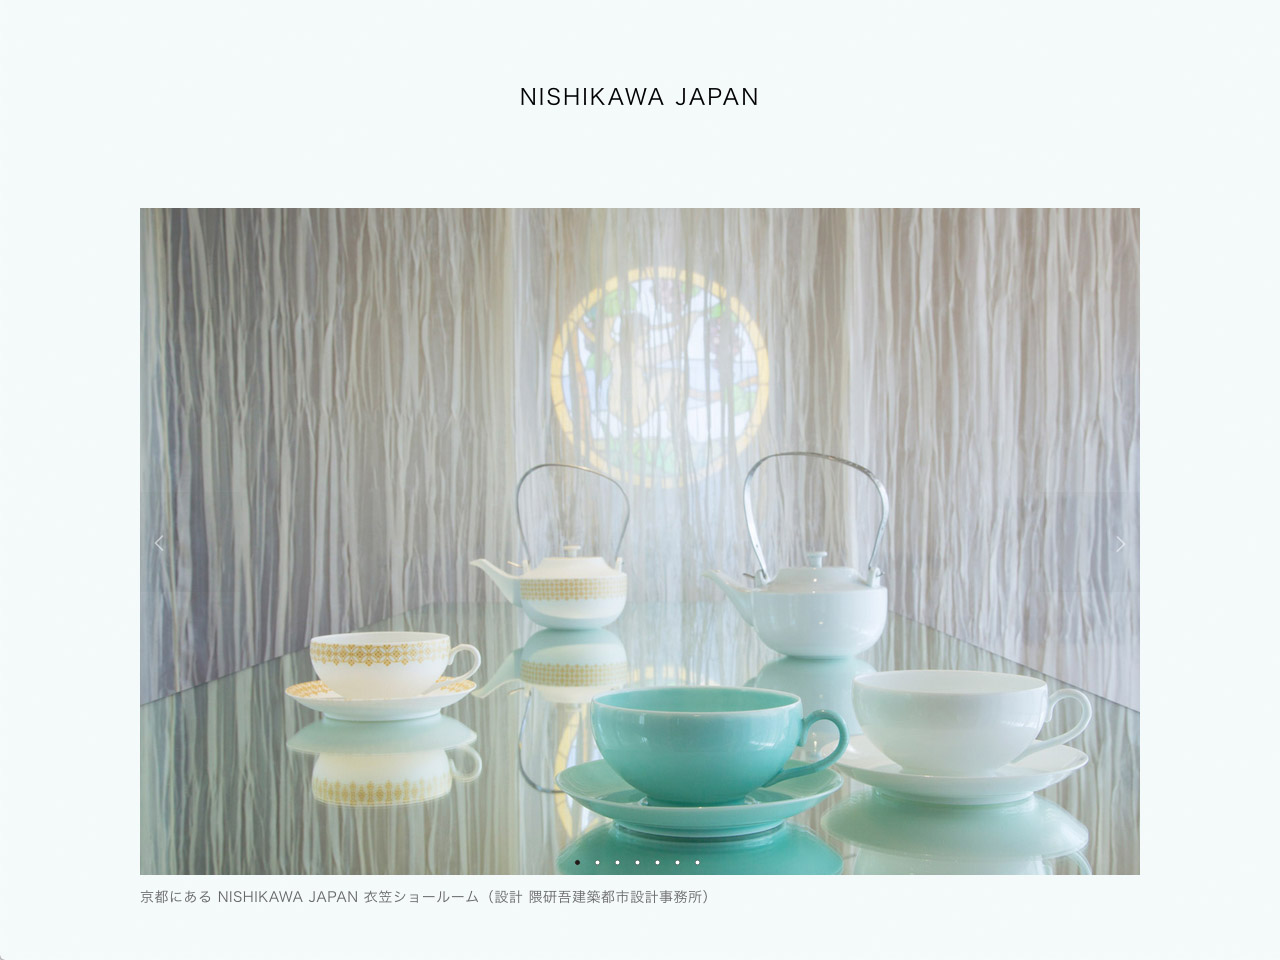 NISHIKAWA JAPAN website